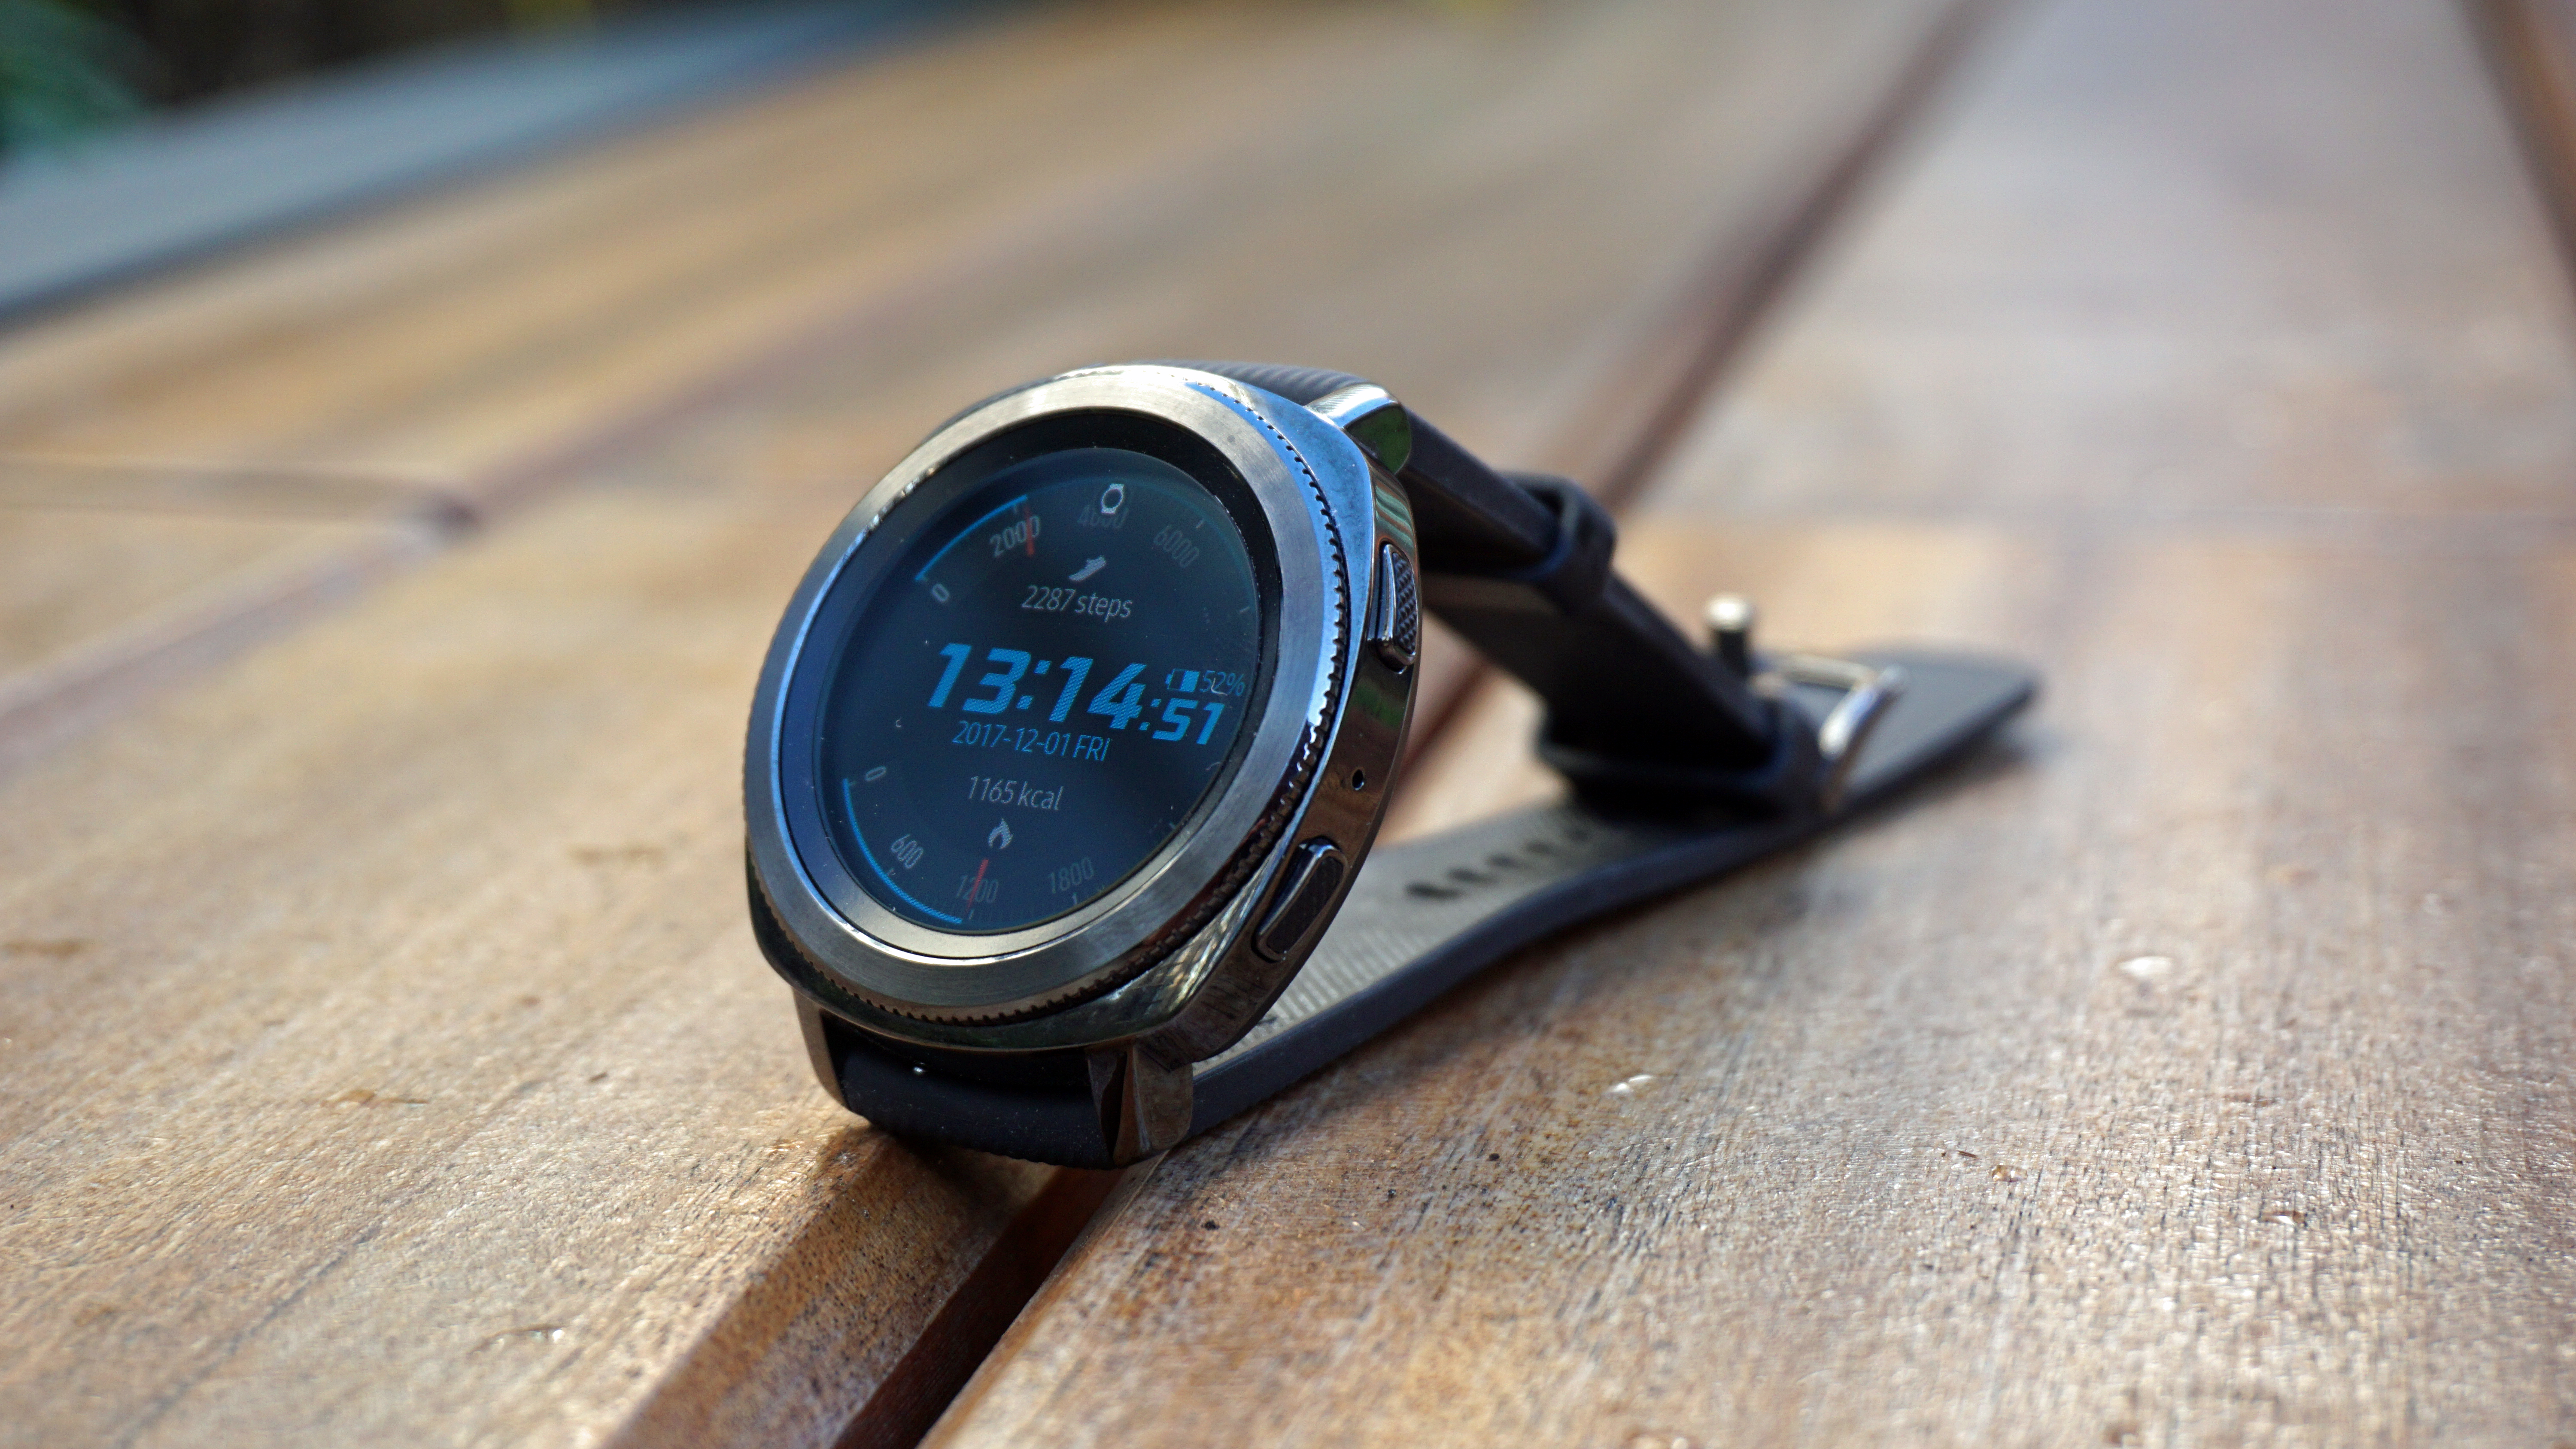 samsung gear sport smartwatch specs